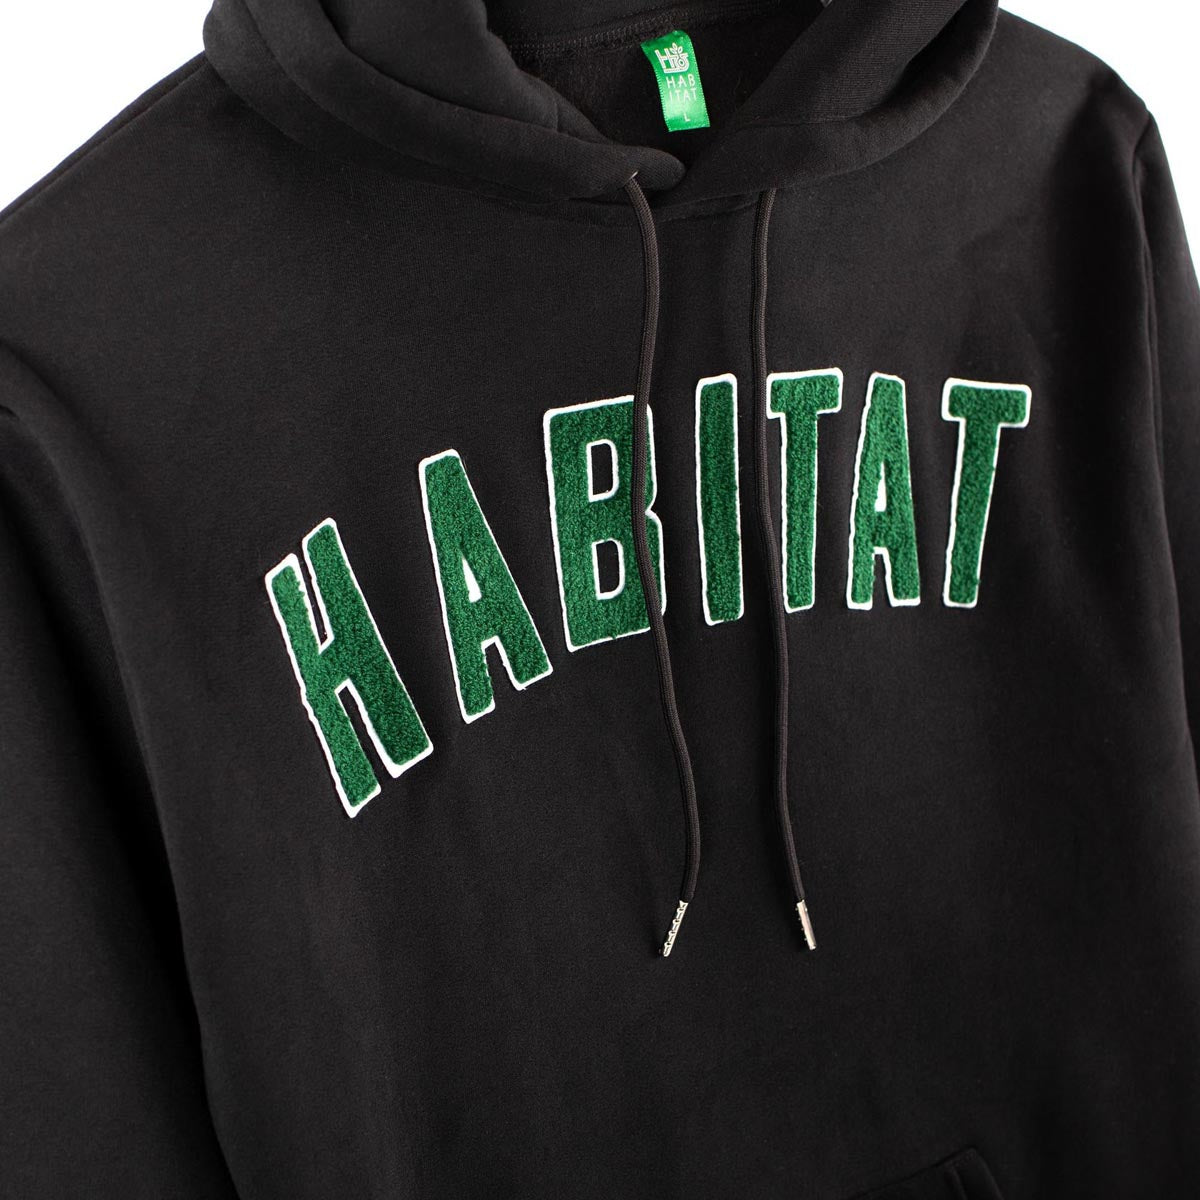 Habitat Ivy League Hoodie - Black image 2